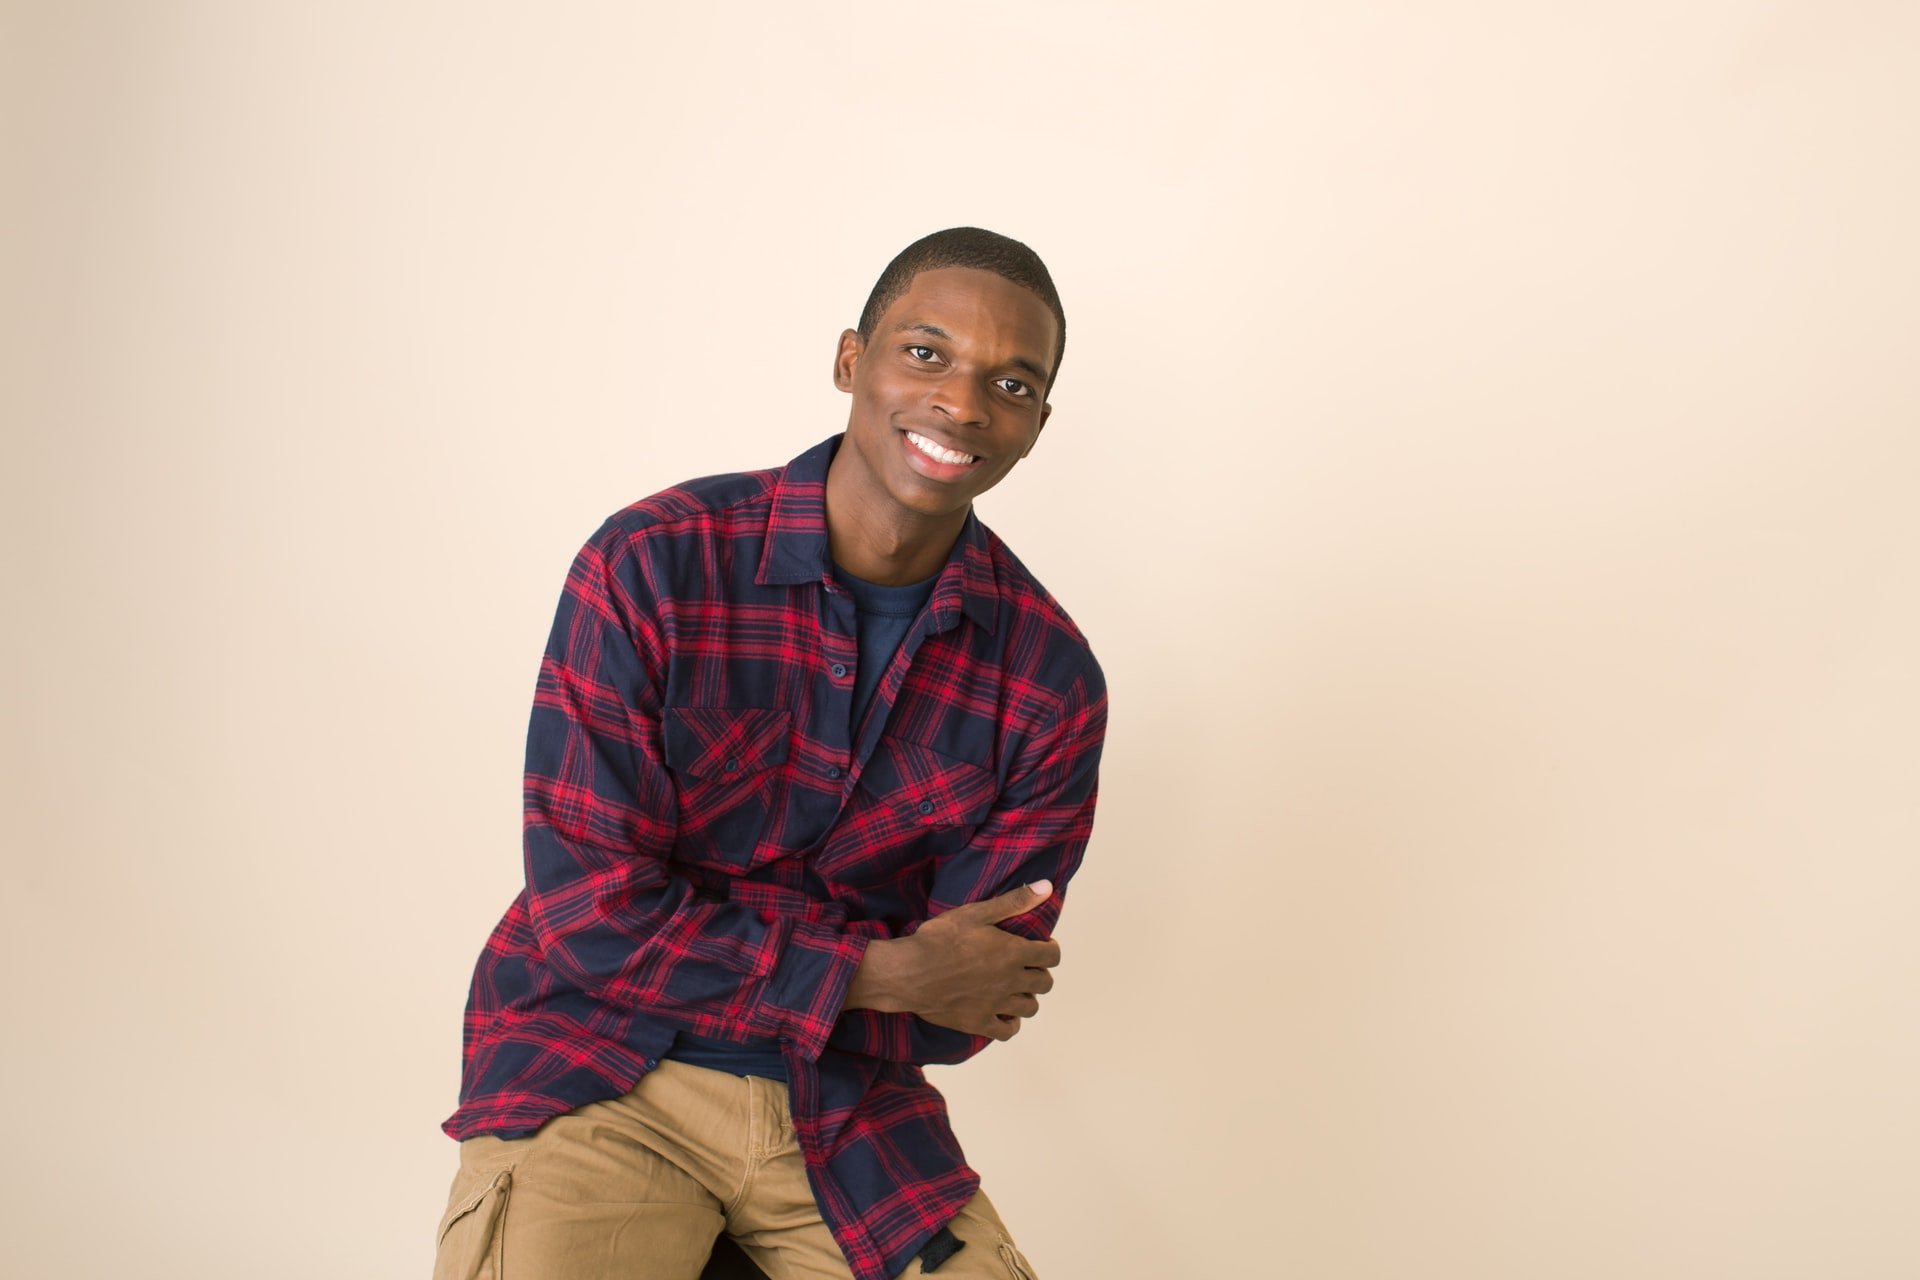 A young black man smiling at the camera